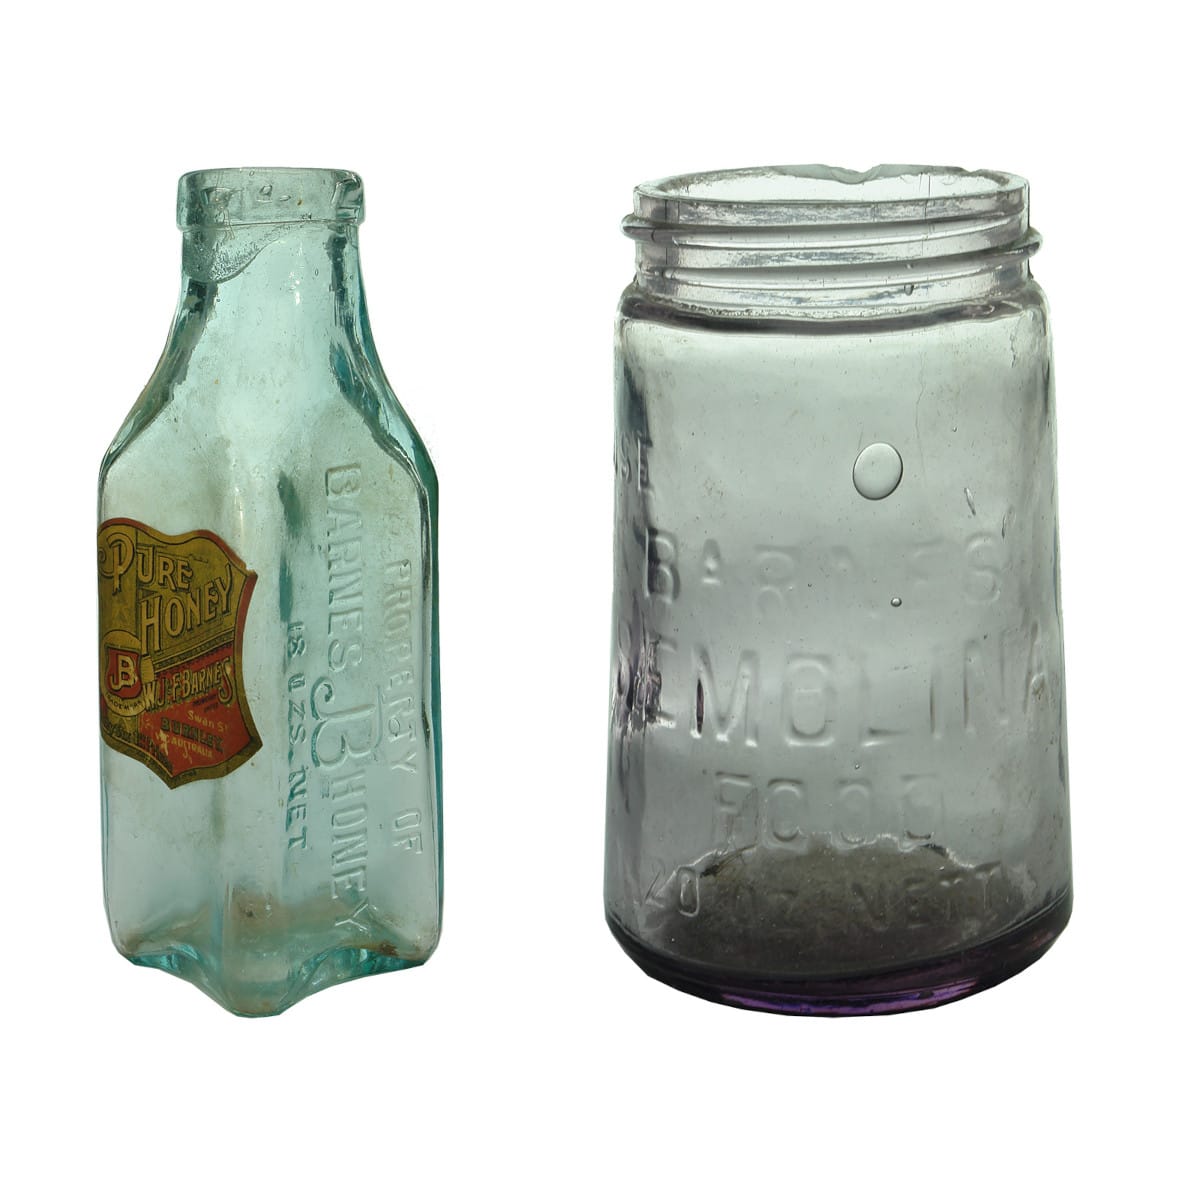 2 Honey Jars: Barnes with original label and Barnes advertising Semolina Food. (Victoria)